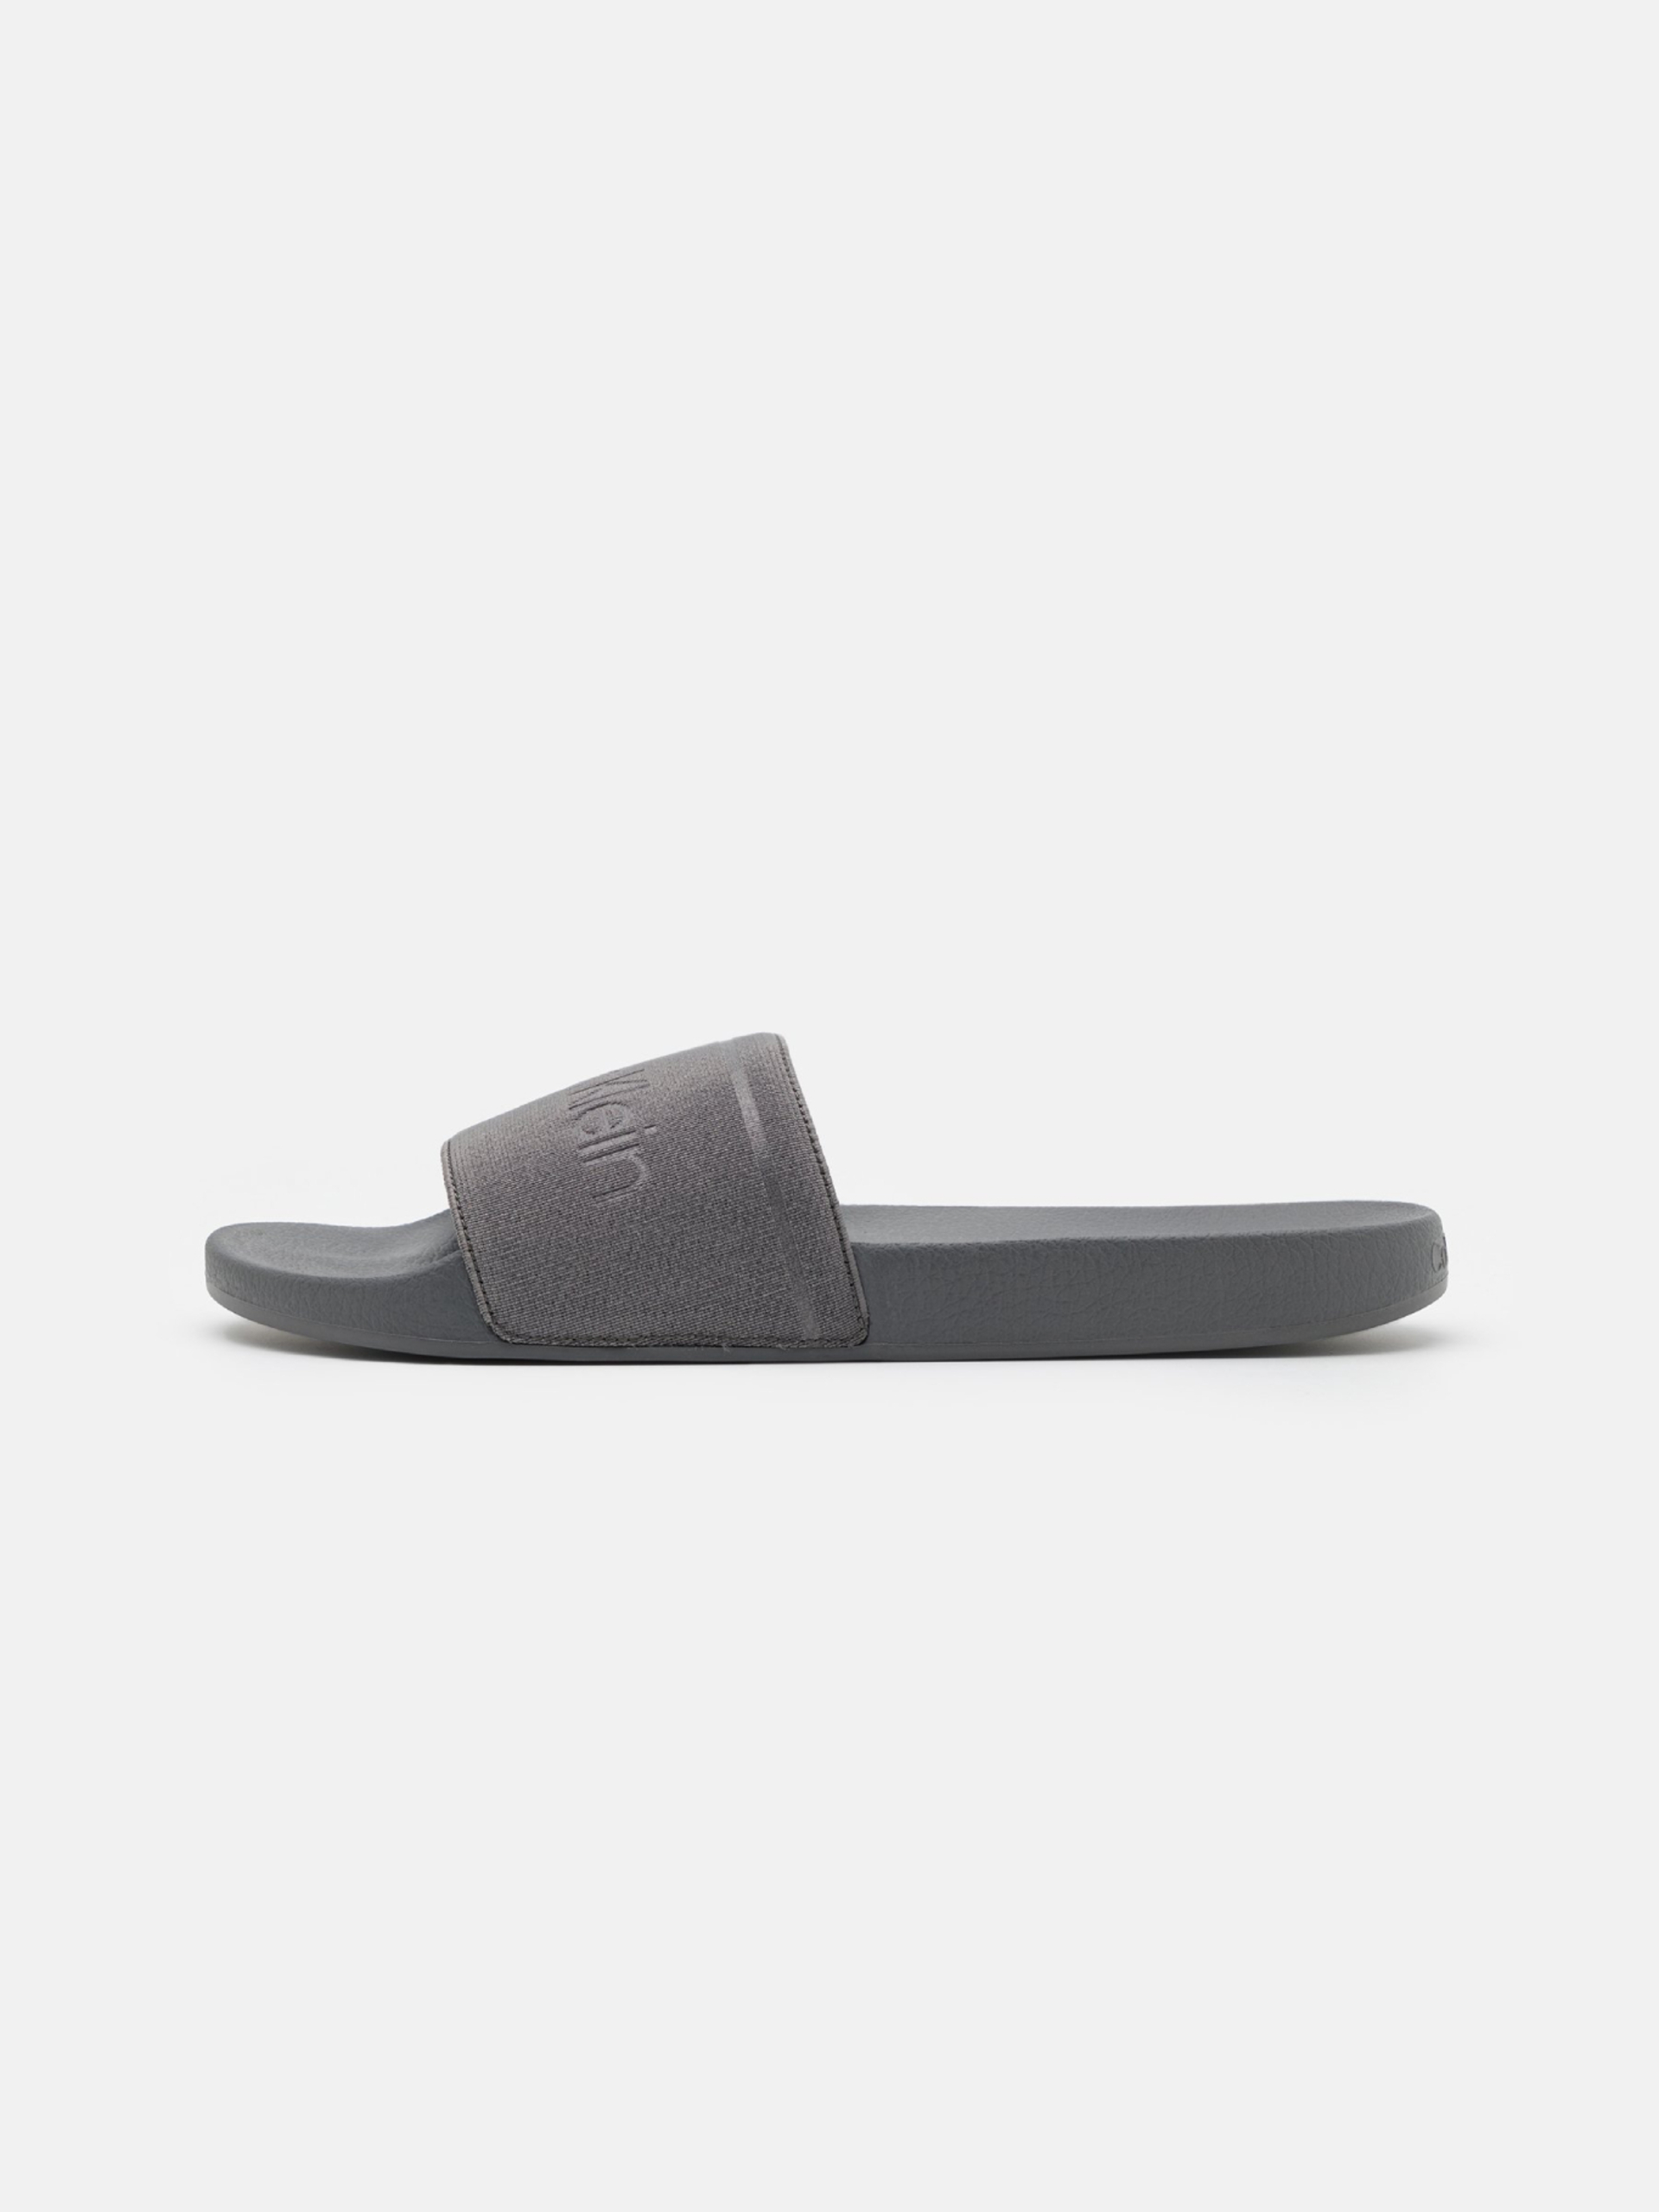 Calvin Klein pánské šedé pantofle - 43 (PD0)